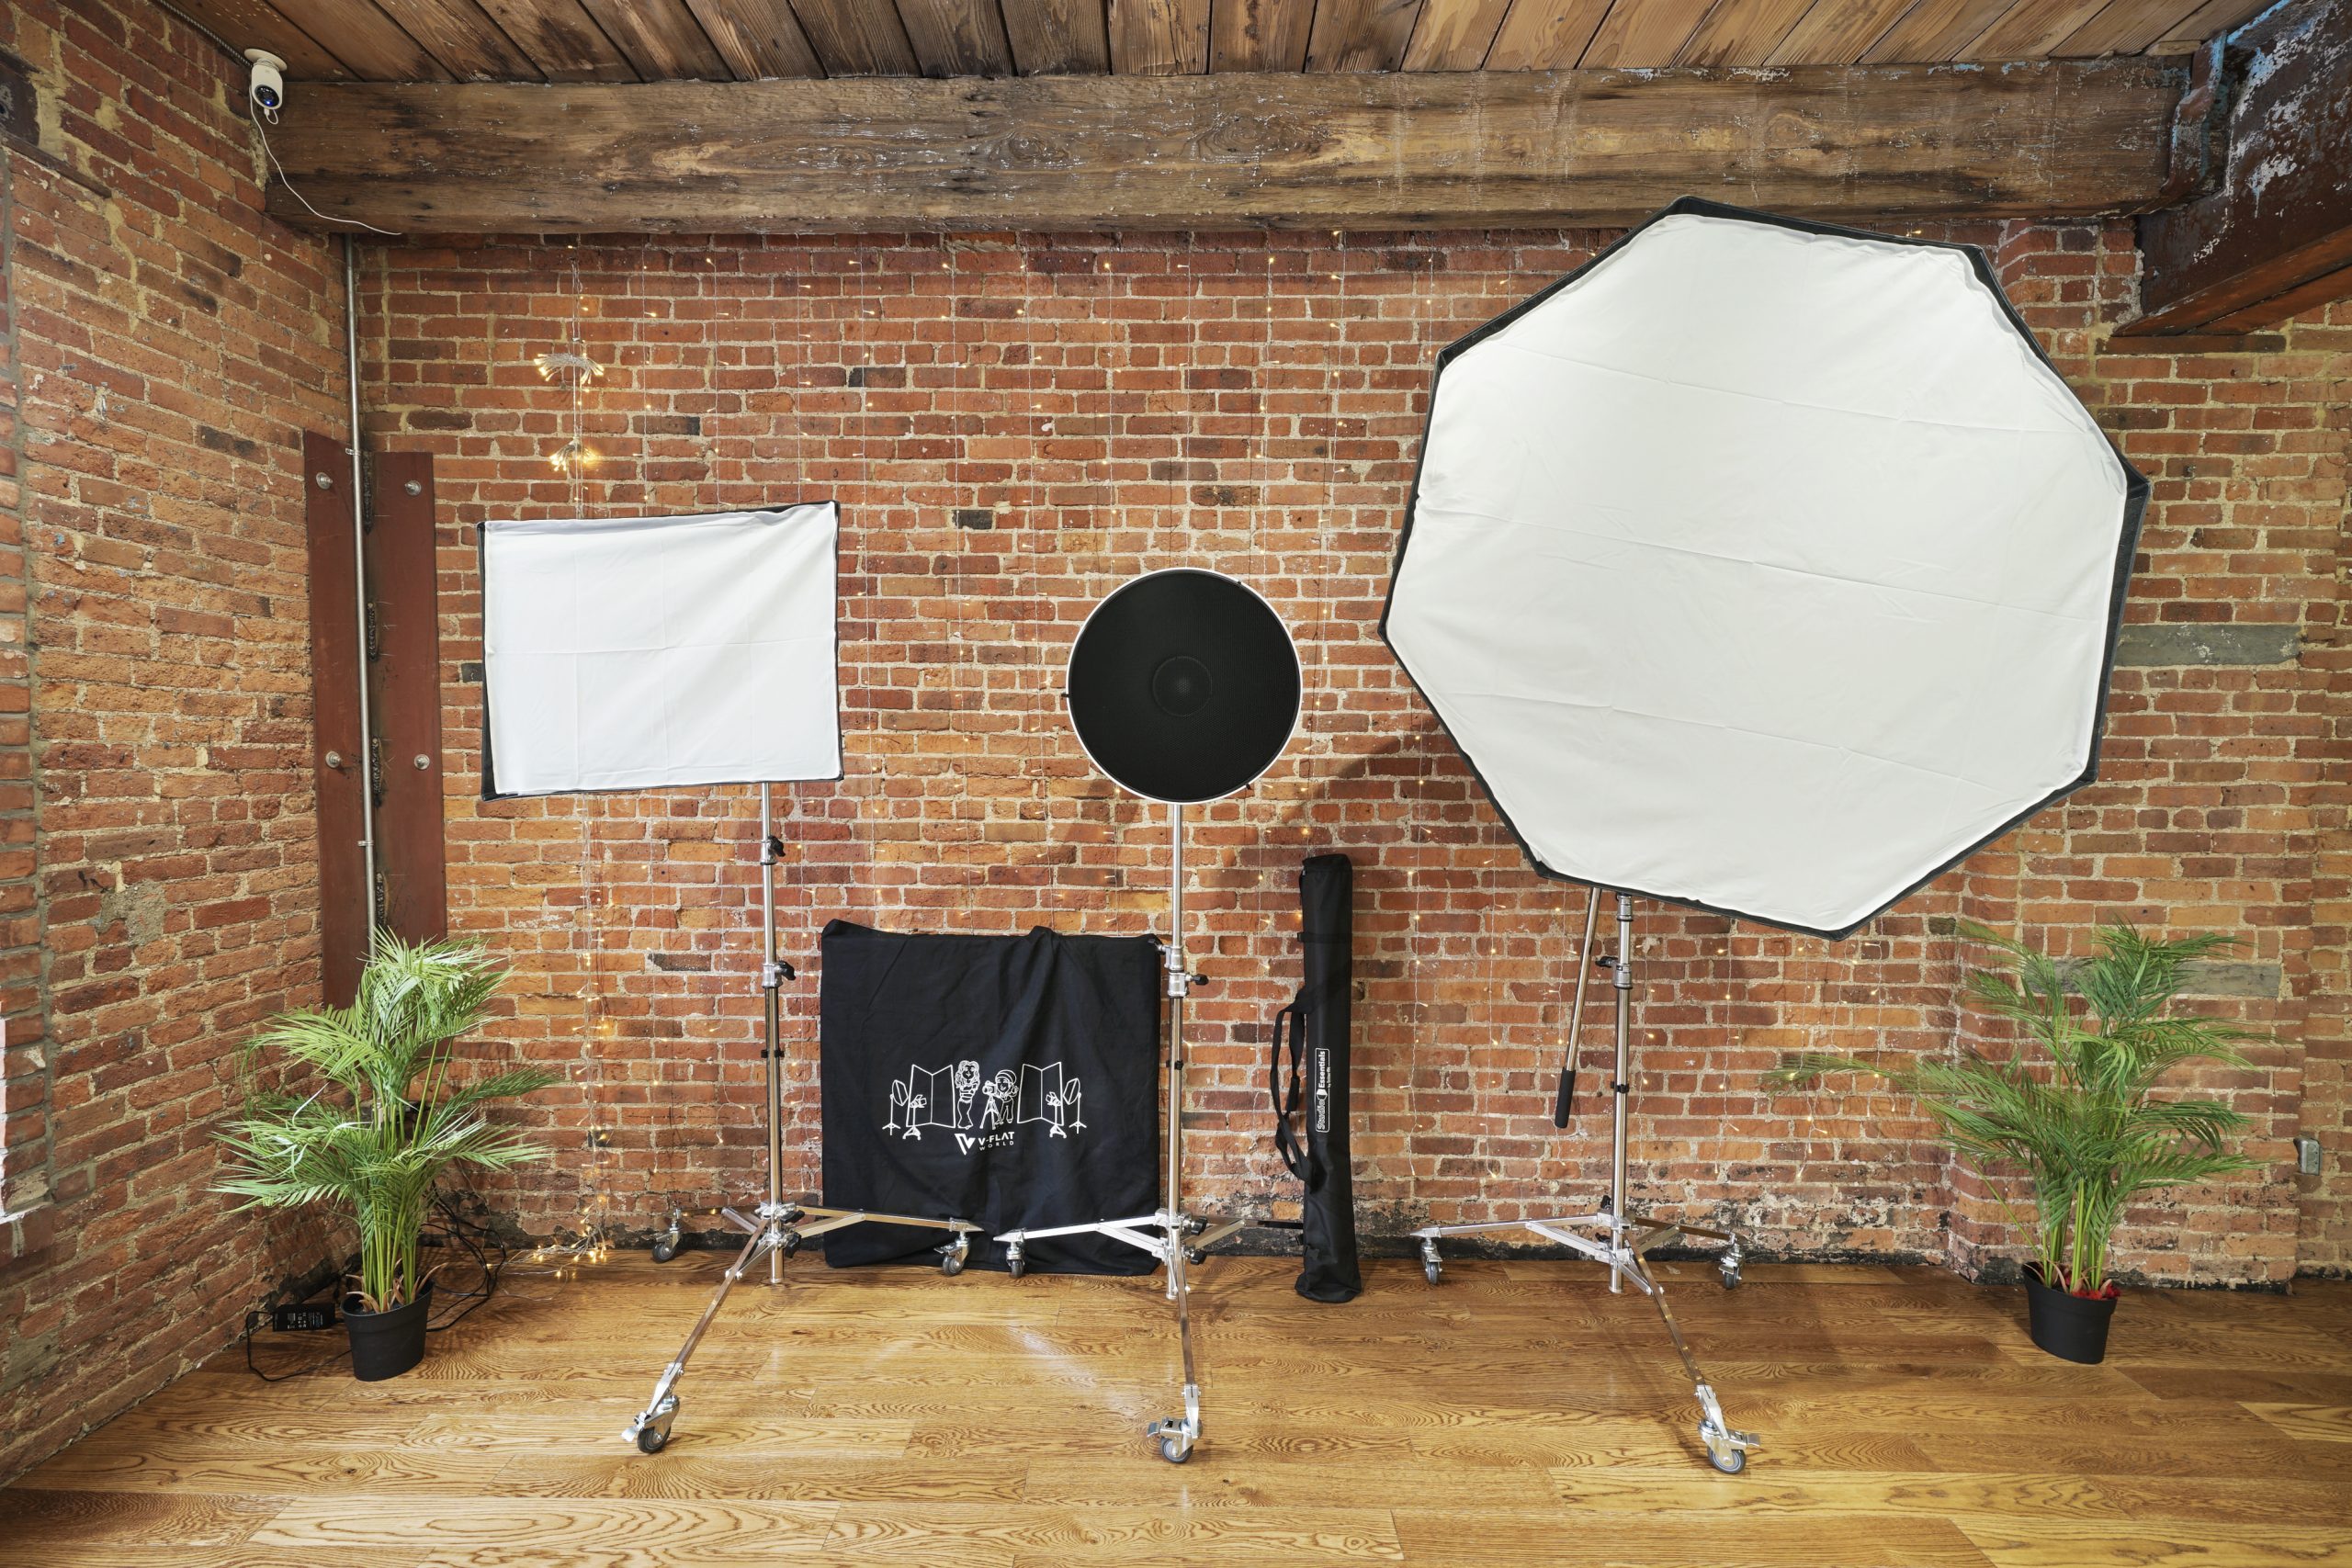 lighting equipment for a photo studio